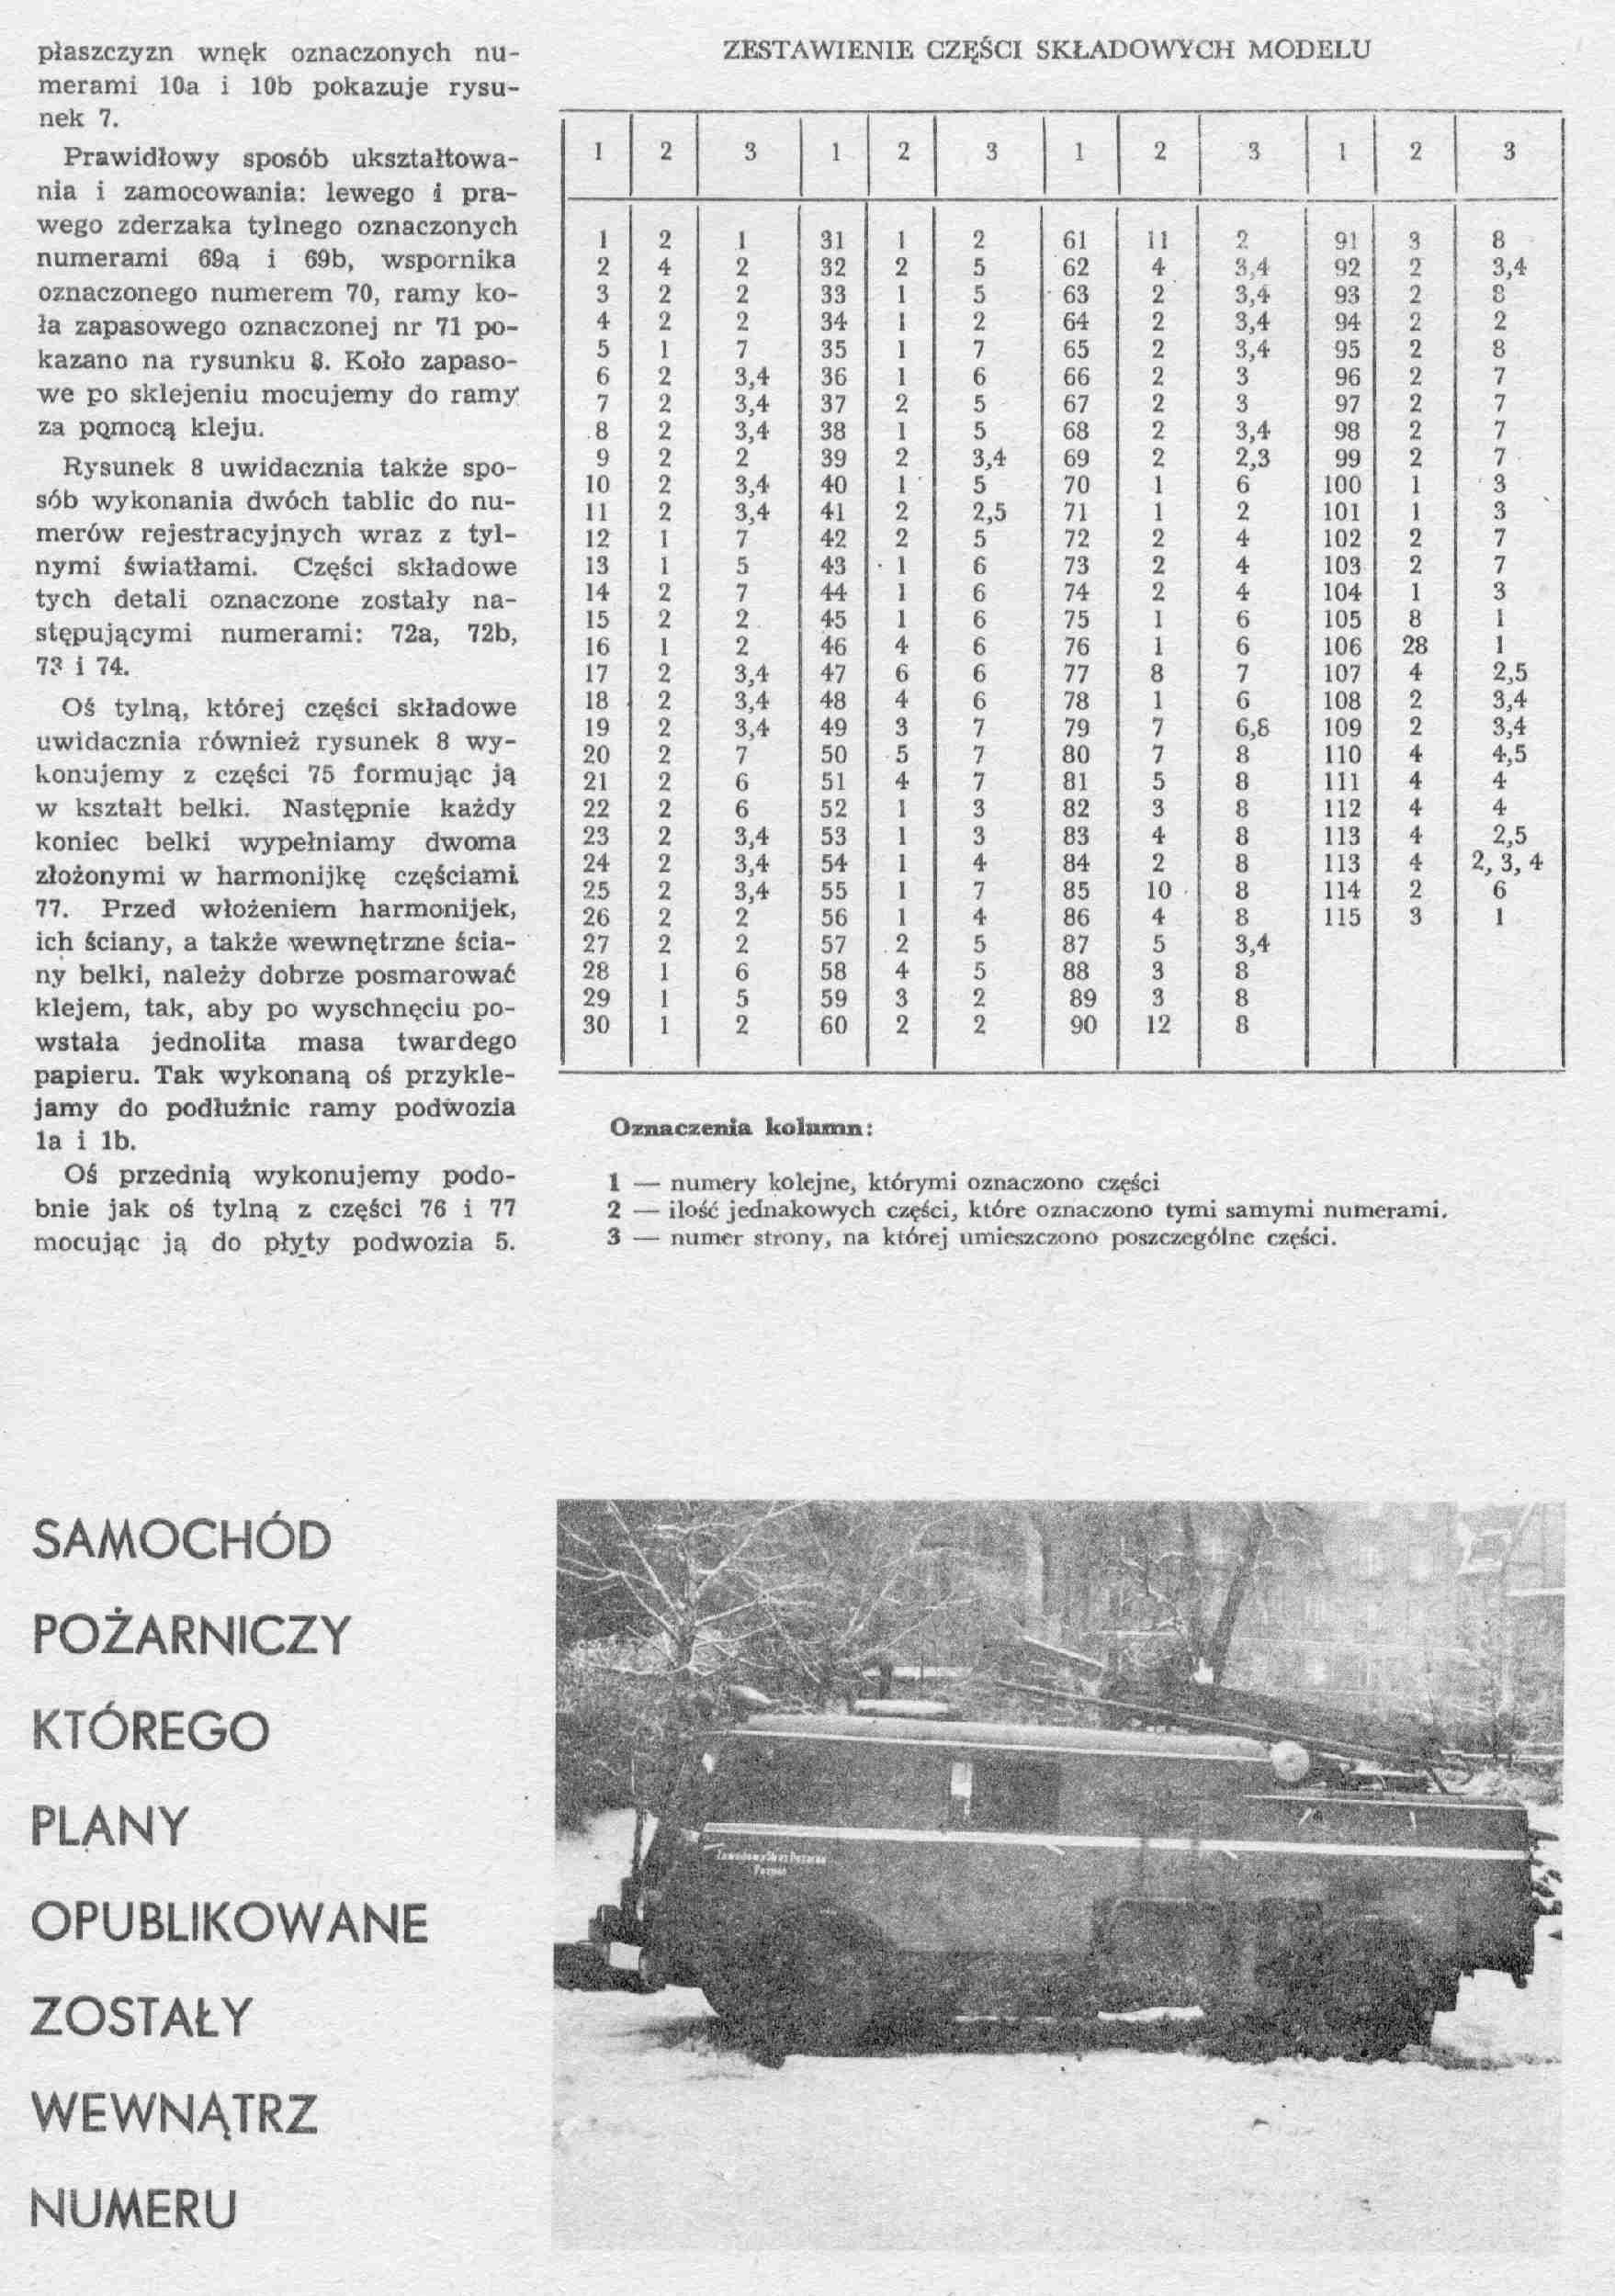 "Maly Modelarz" 7-8, 1967, 7 c.